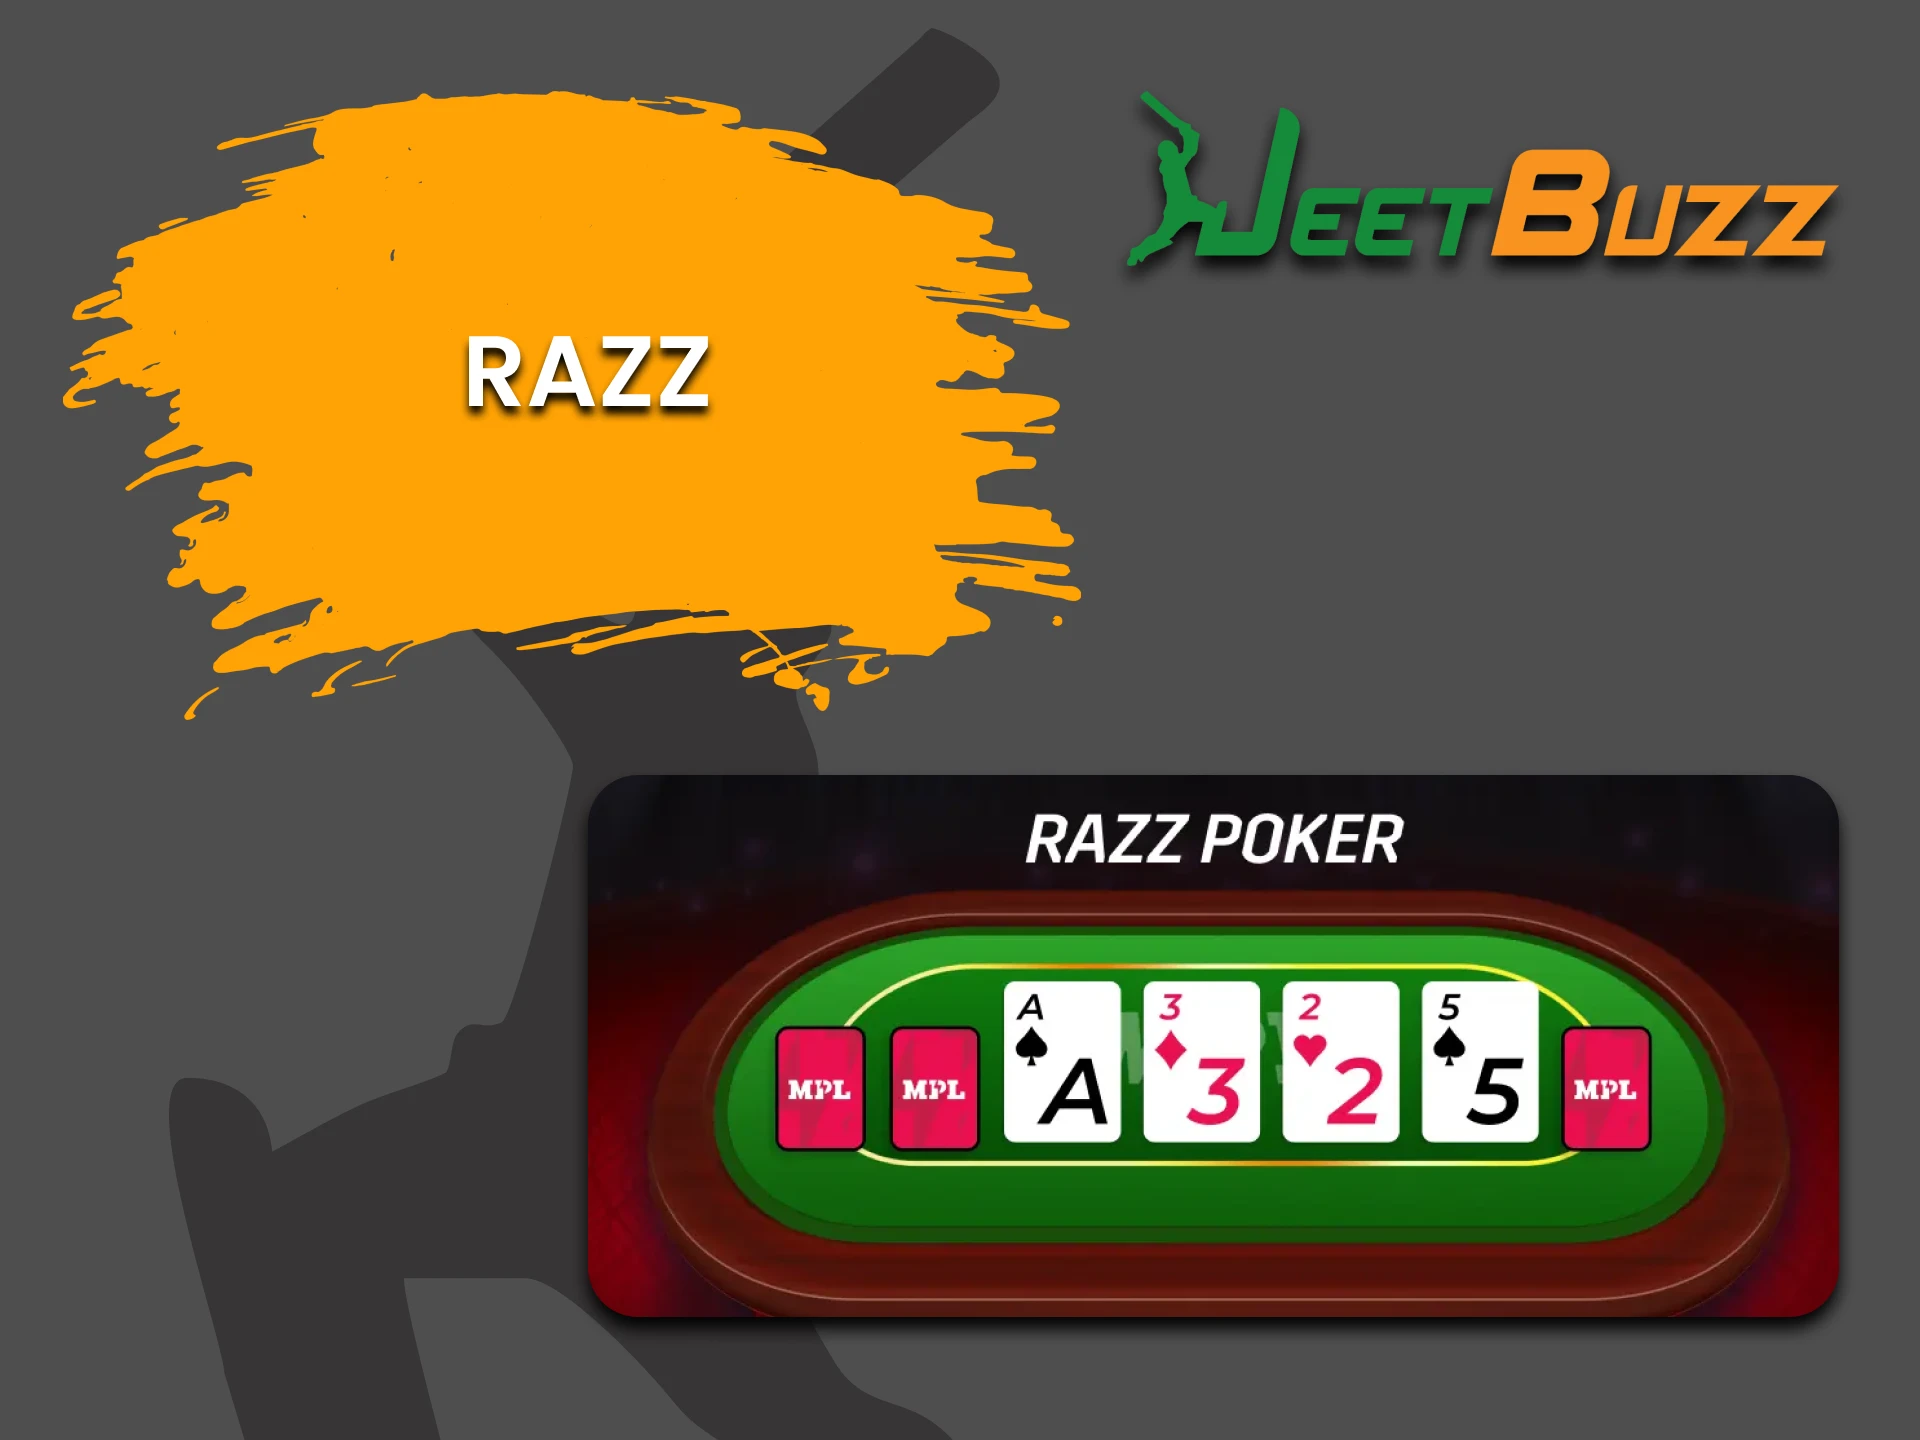 To play Poker on JeetBuzz, choose Razz.